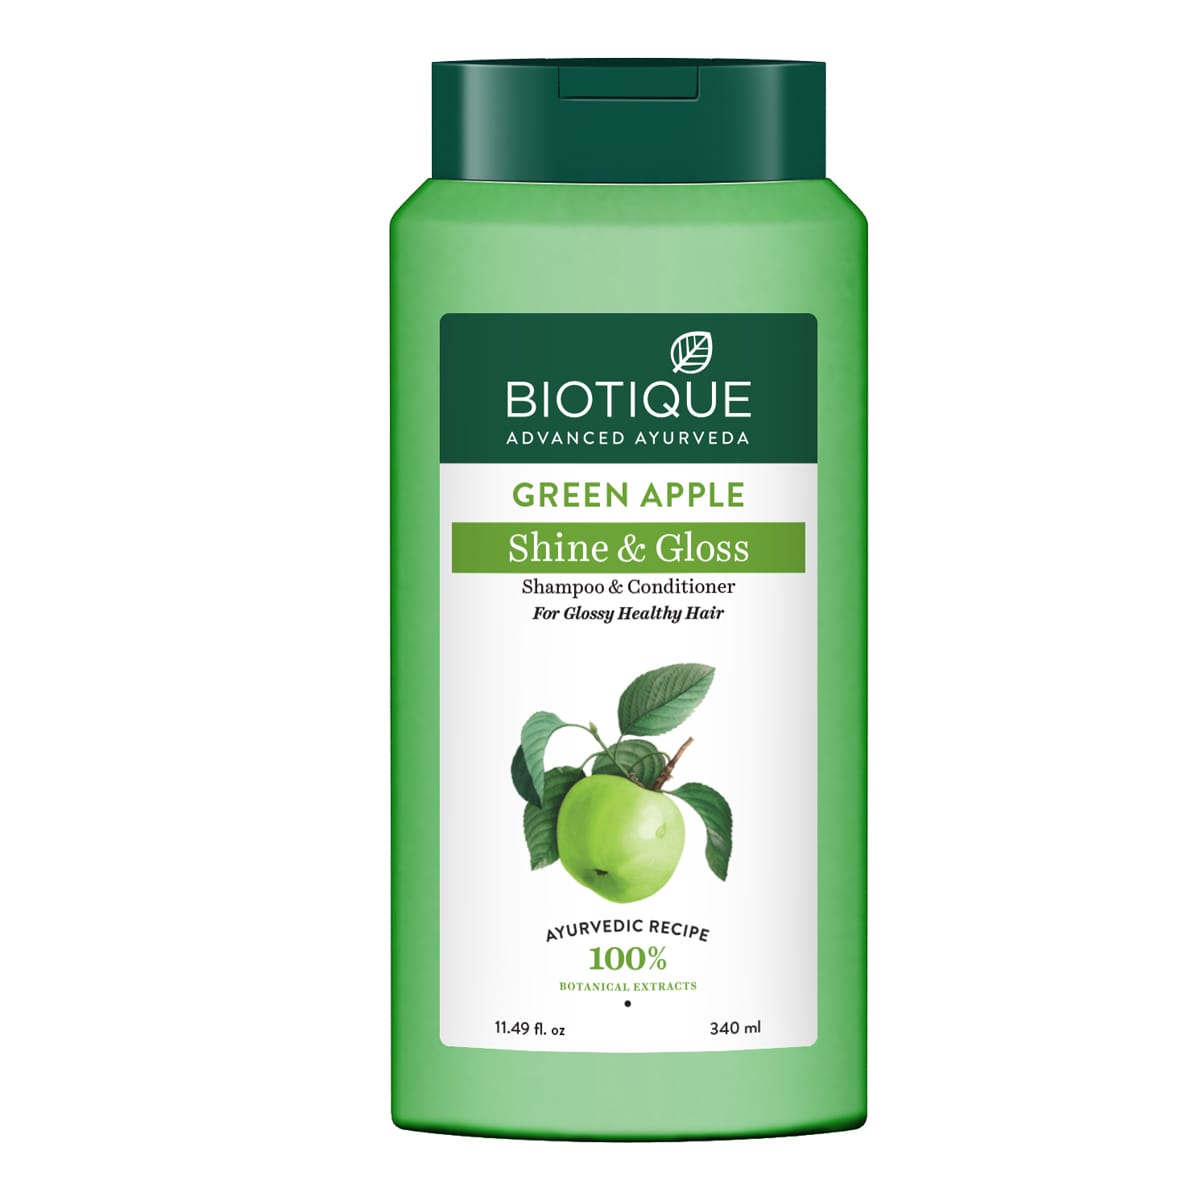 Biotique Green Apple Shine & Gloss Shampoo & Conditioner 340ml X 2 (Pack of 2)